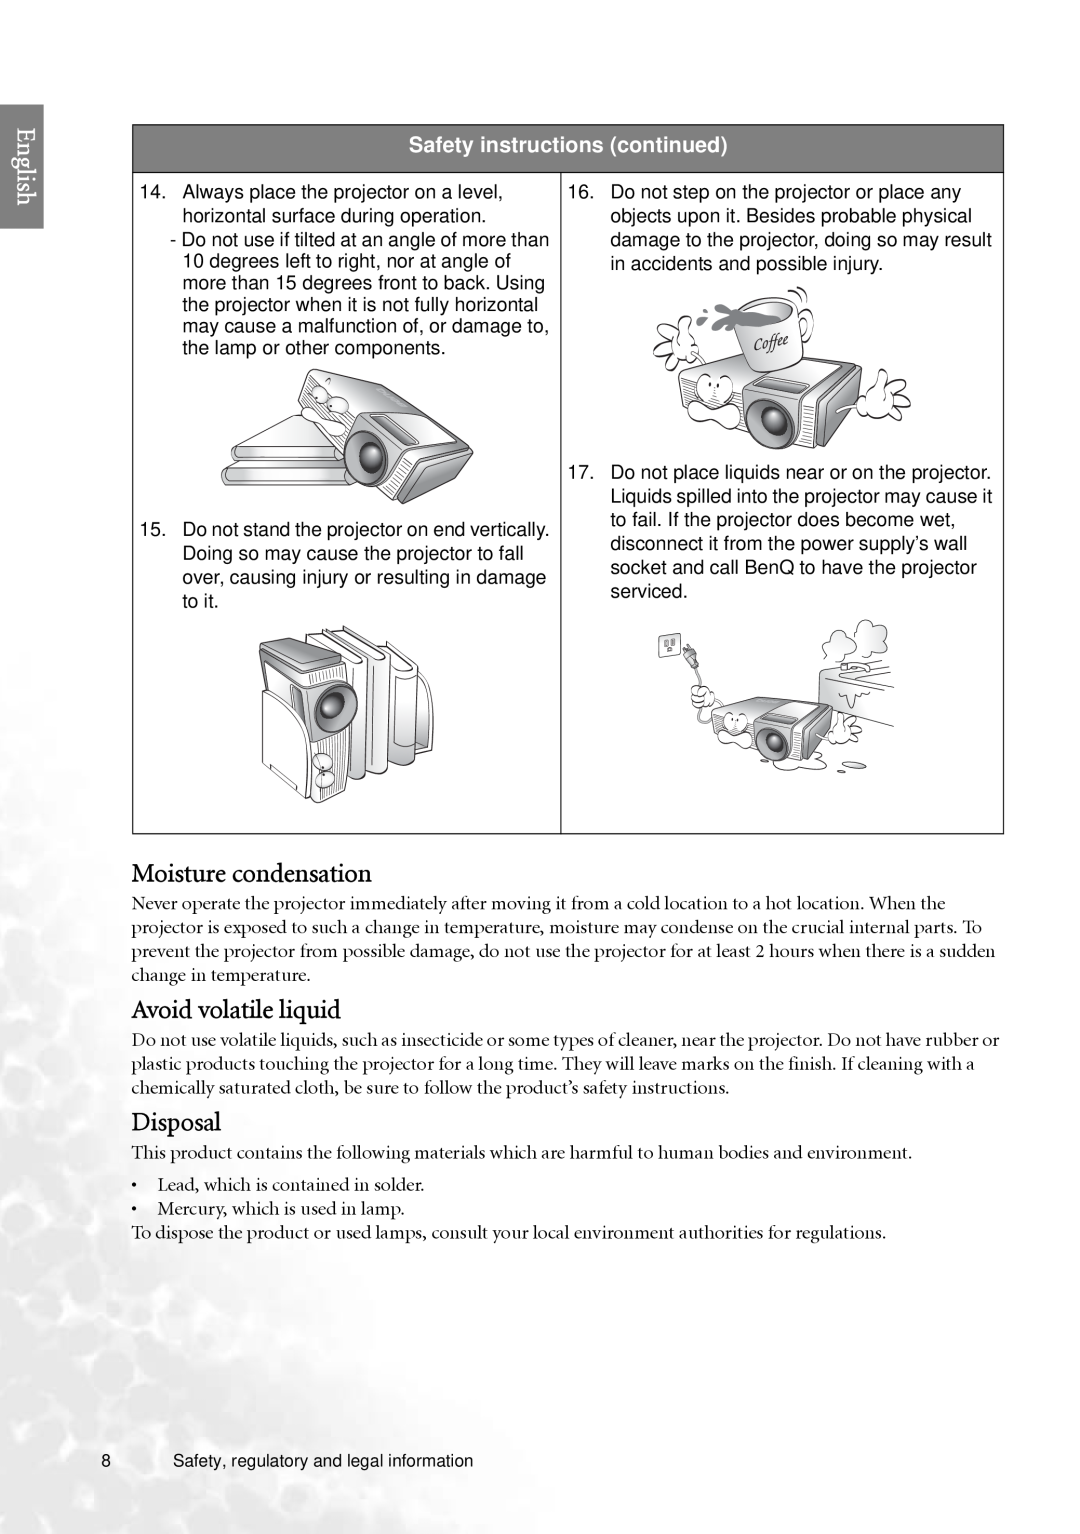 BenQ PE7700 user manual Moisture condensation, Avoid volatile liquid, Disposal, Safety instructions continued 